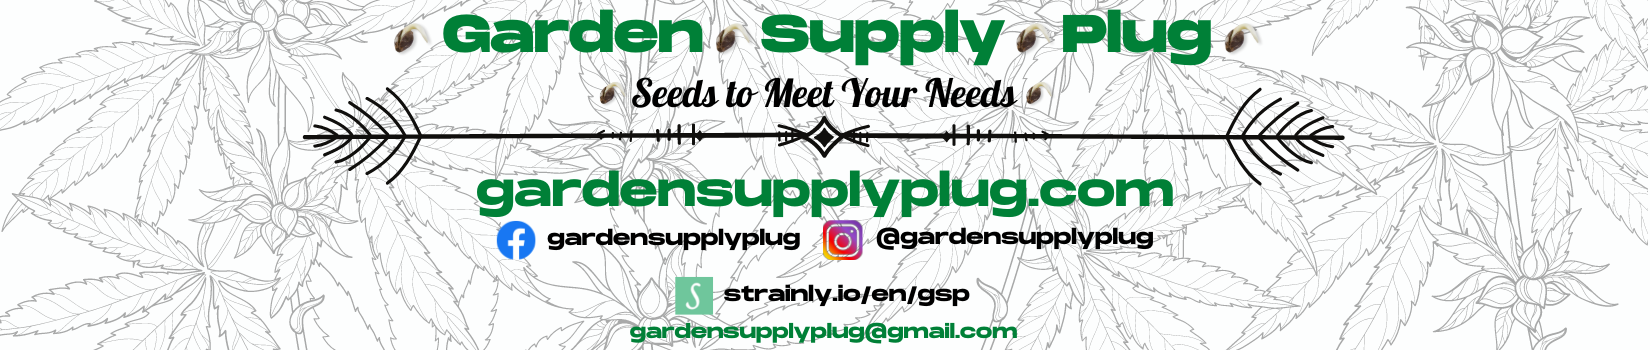 GardenSupplyPlug